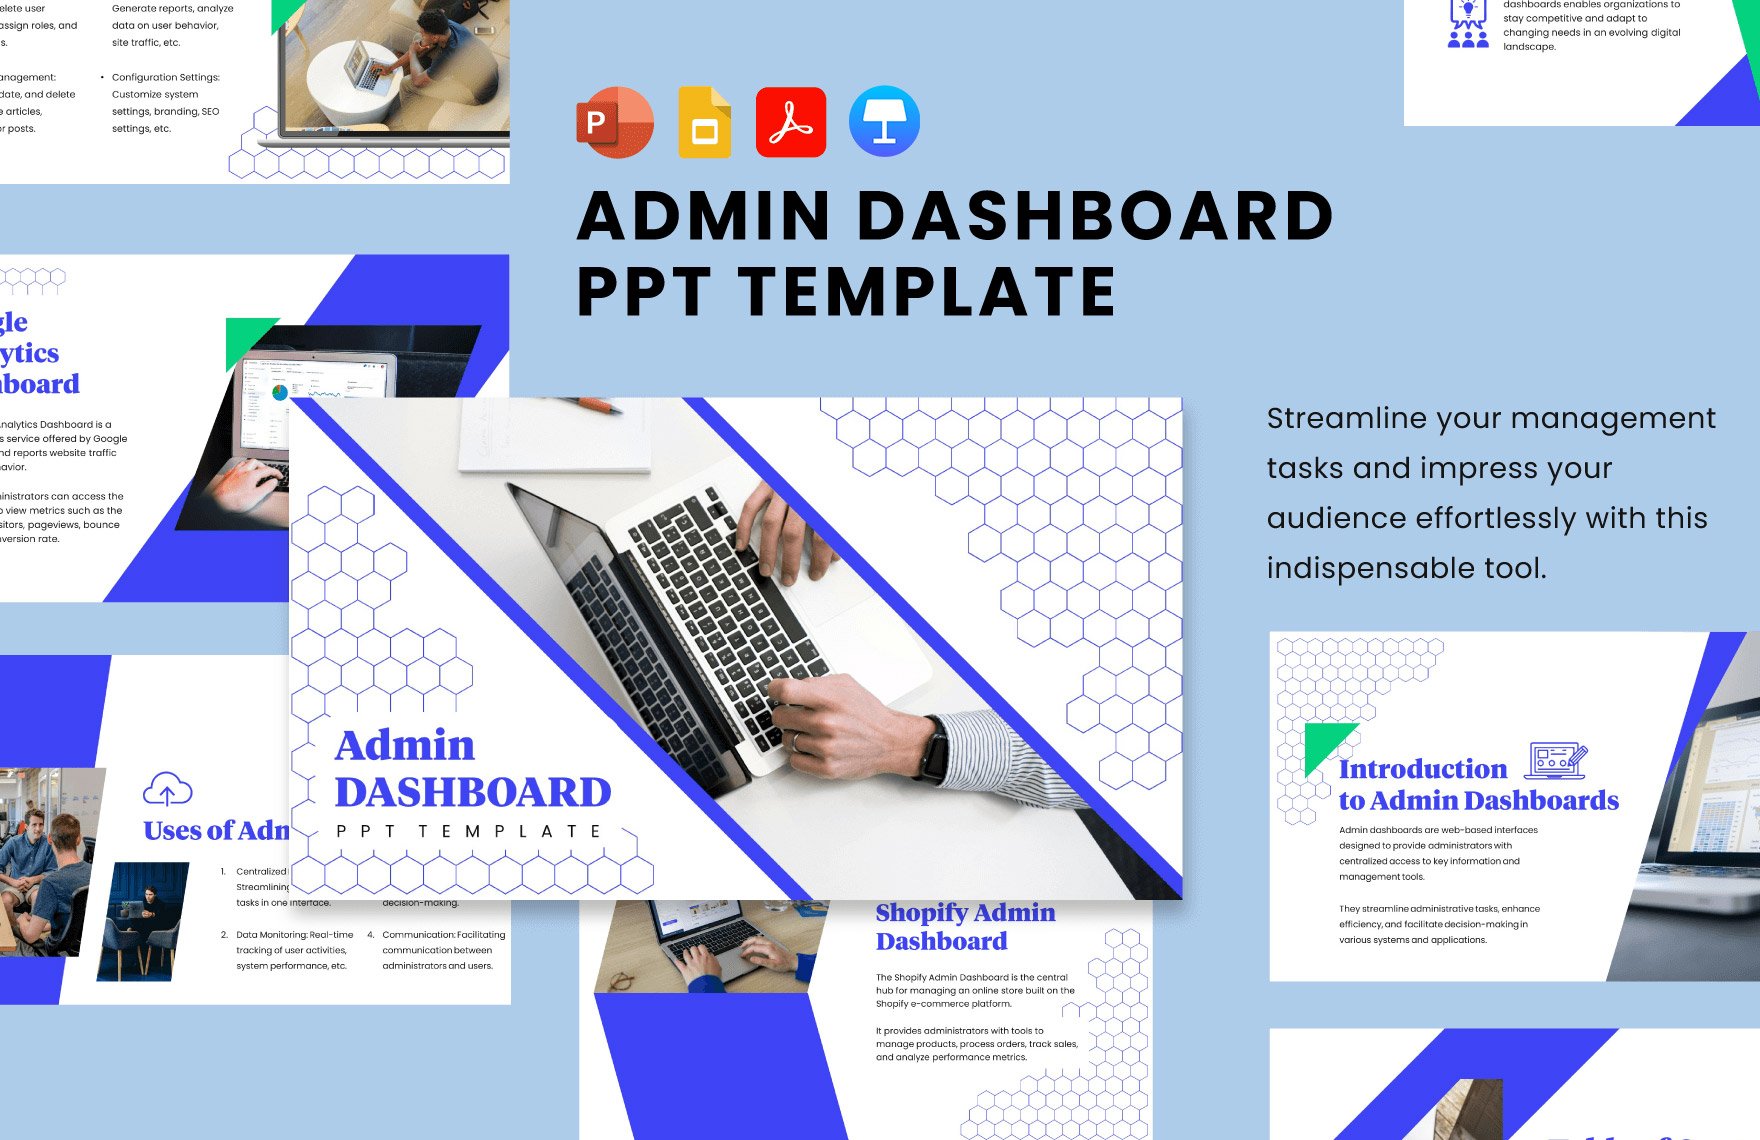 Admin Dashboard PPT Template in PDF, PowerPoint, Google Slides, Apple Keynote